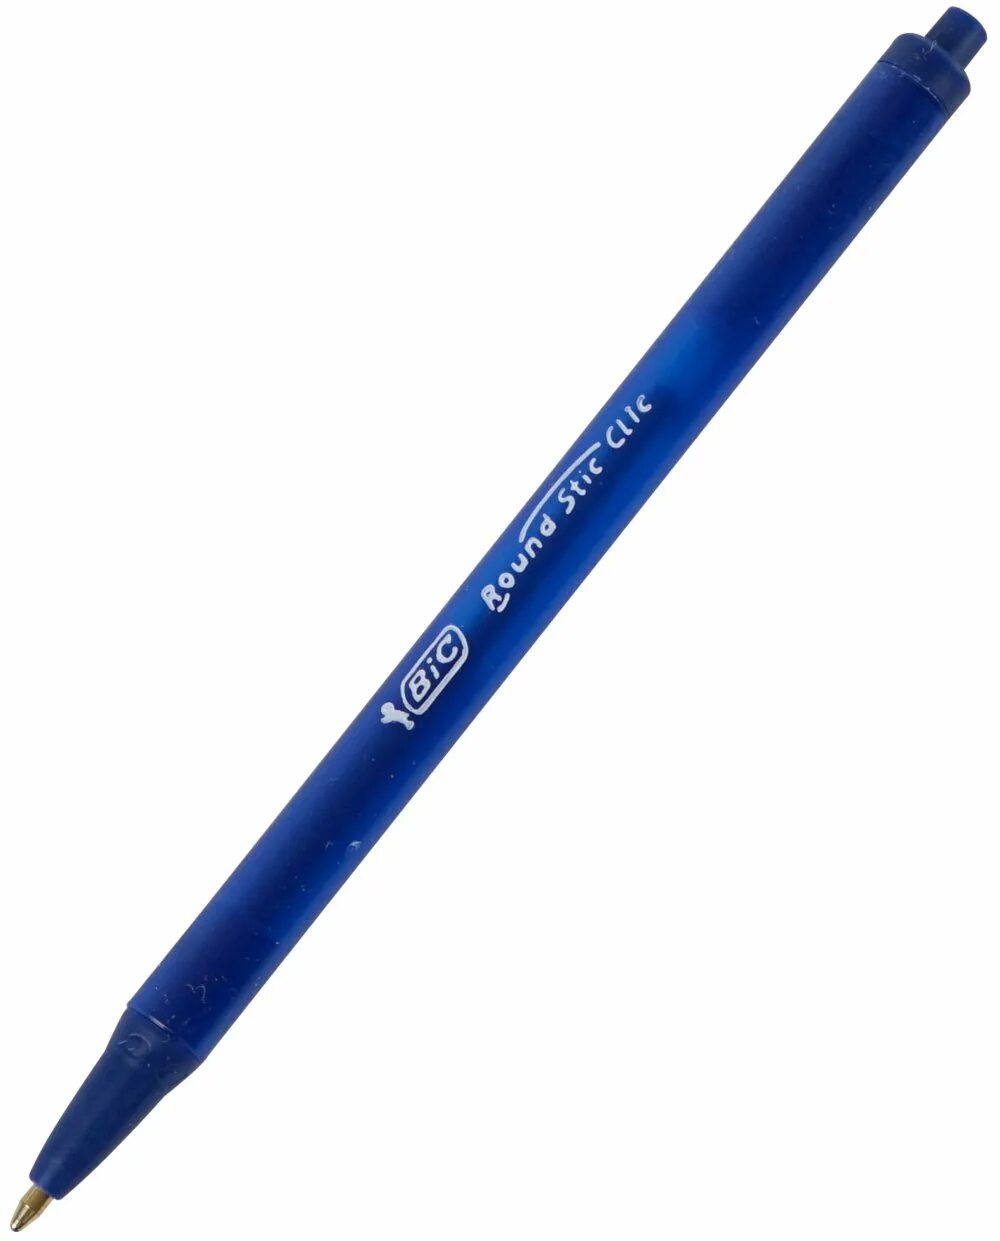 Шариковая ручка BIC Round Stick clic. Round Stick ручка BIC. Ручка шариковая BIC "Round Stic" синяя, 1,0мм. Round Stick med/May ручка BIC 1 мм. Round stick